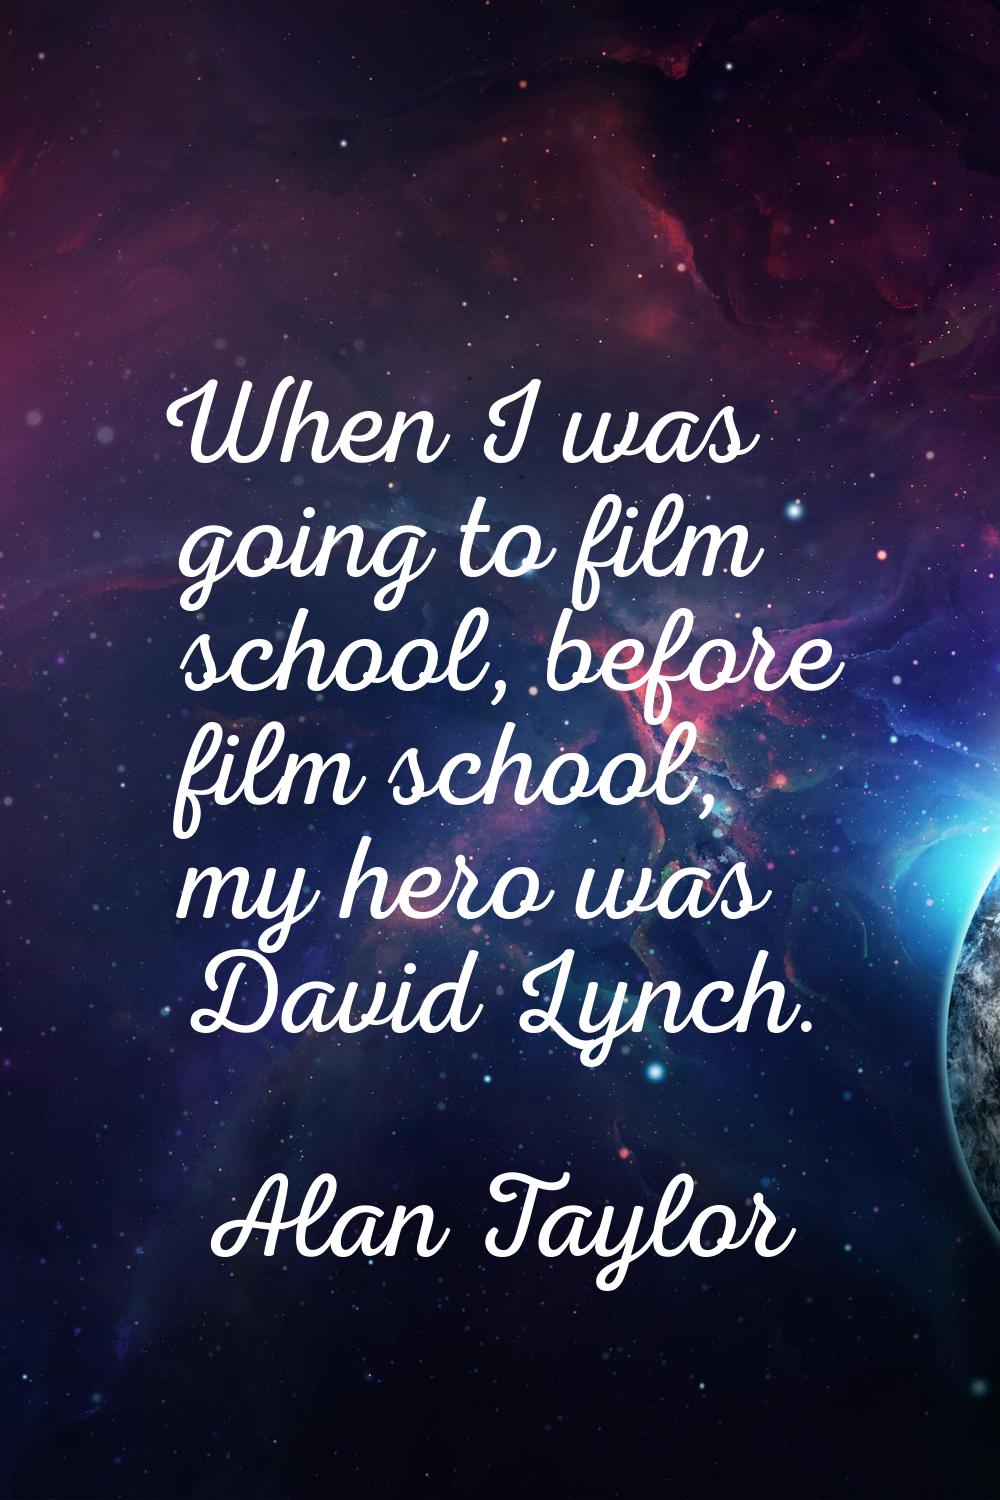 When I was going to film school, before film school, my hero was David Lynch.